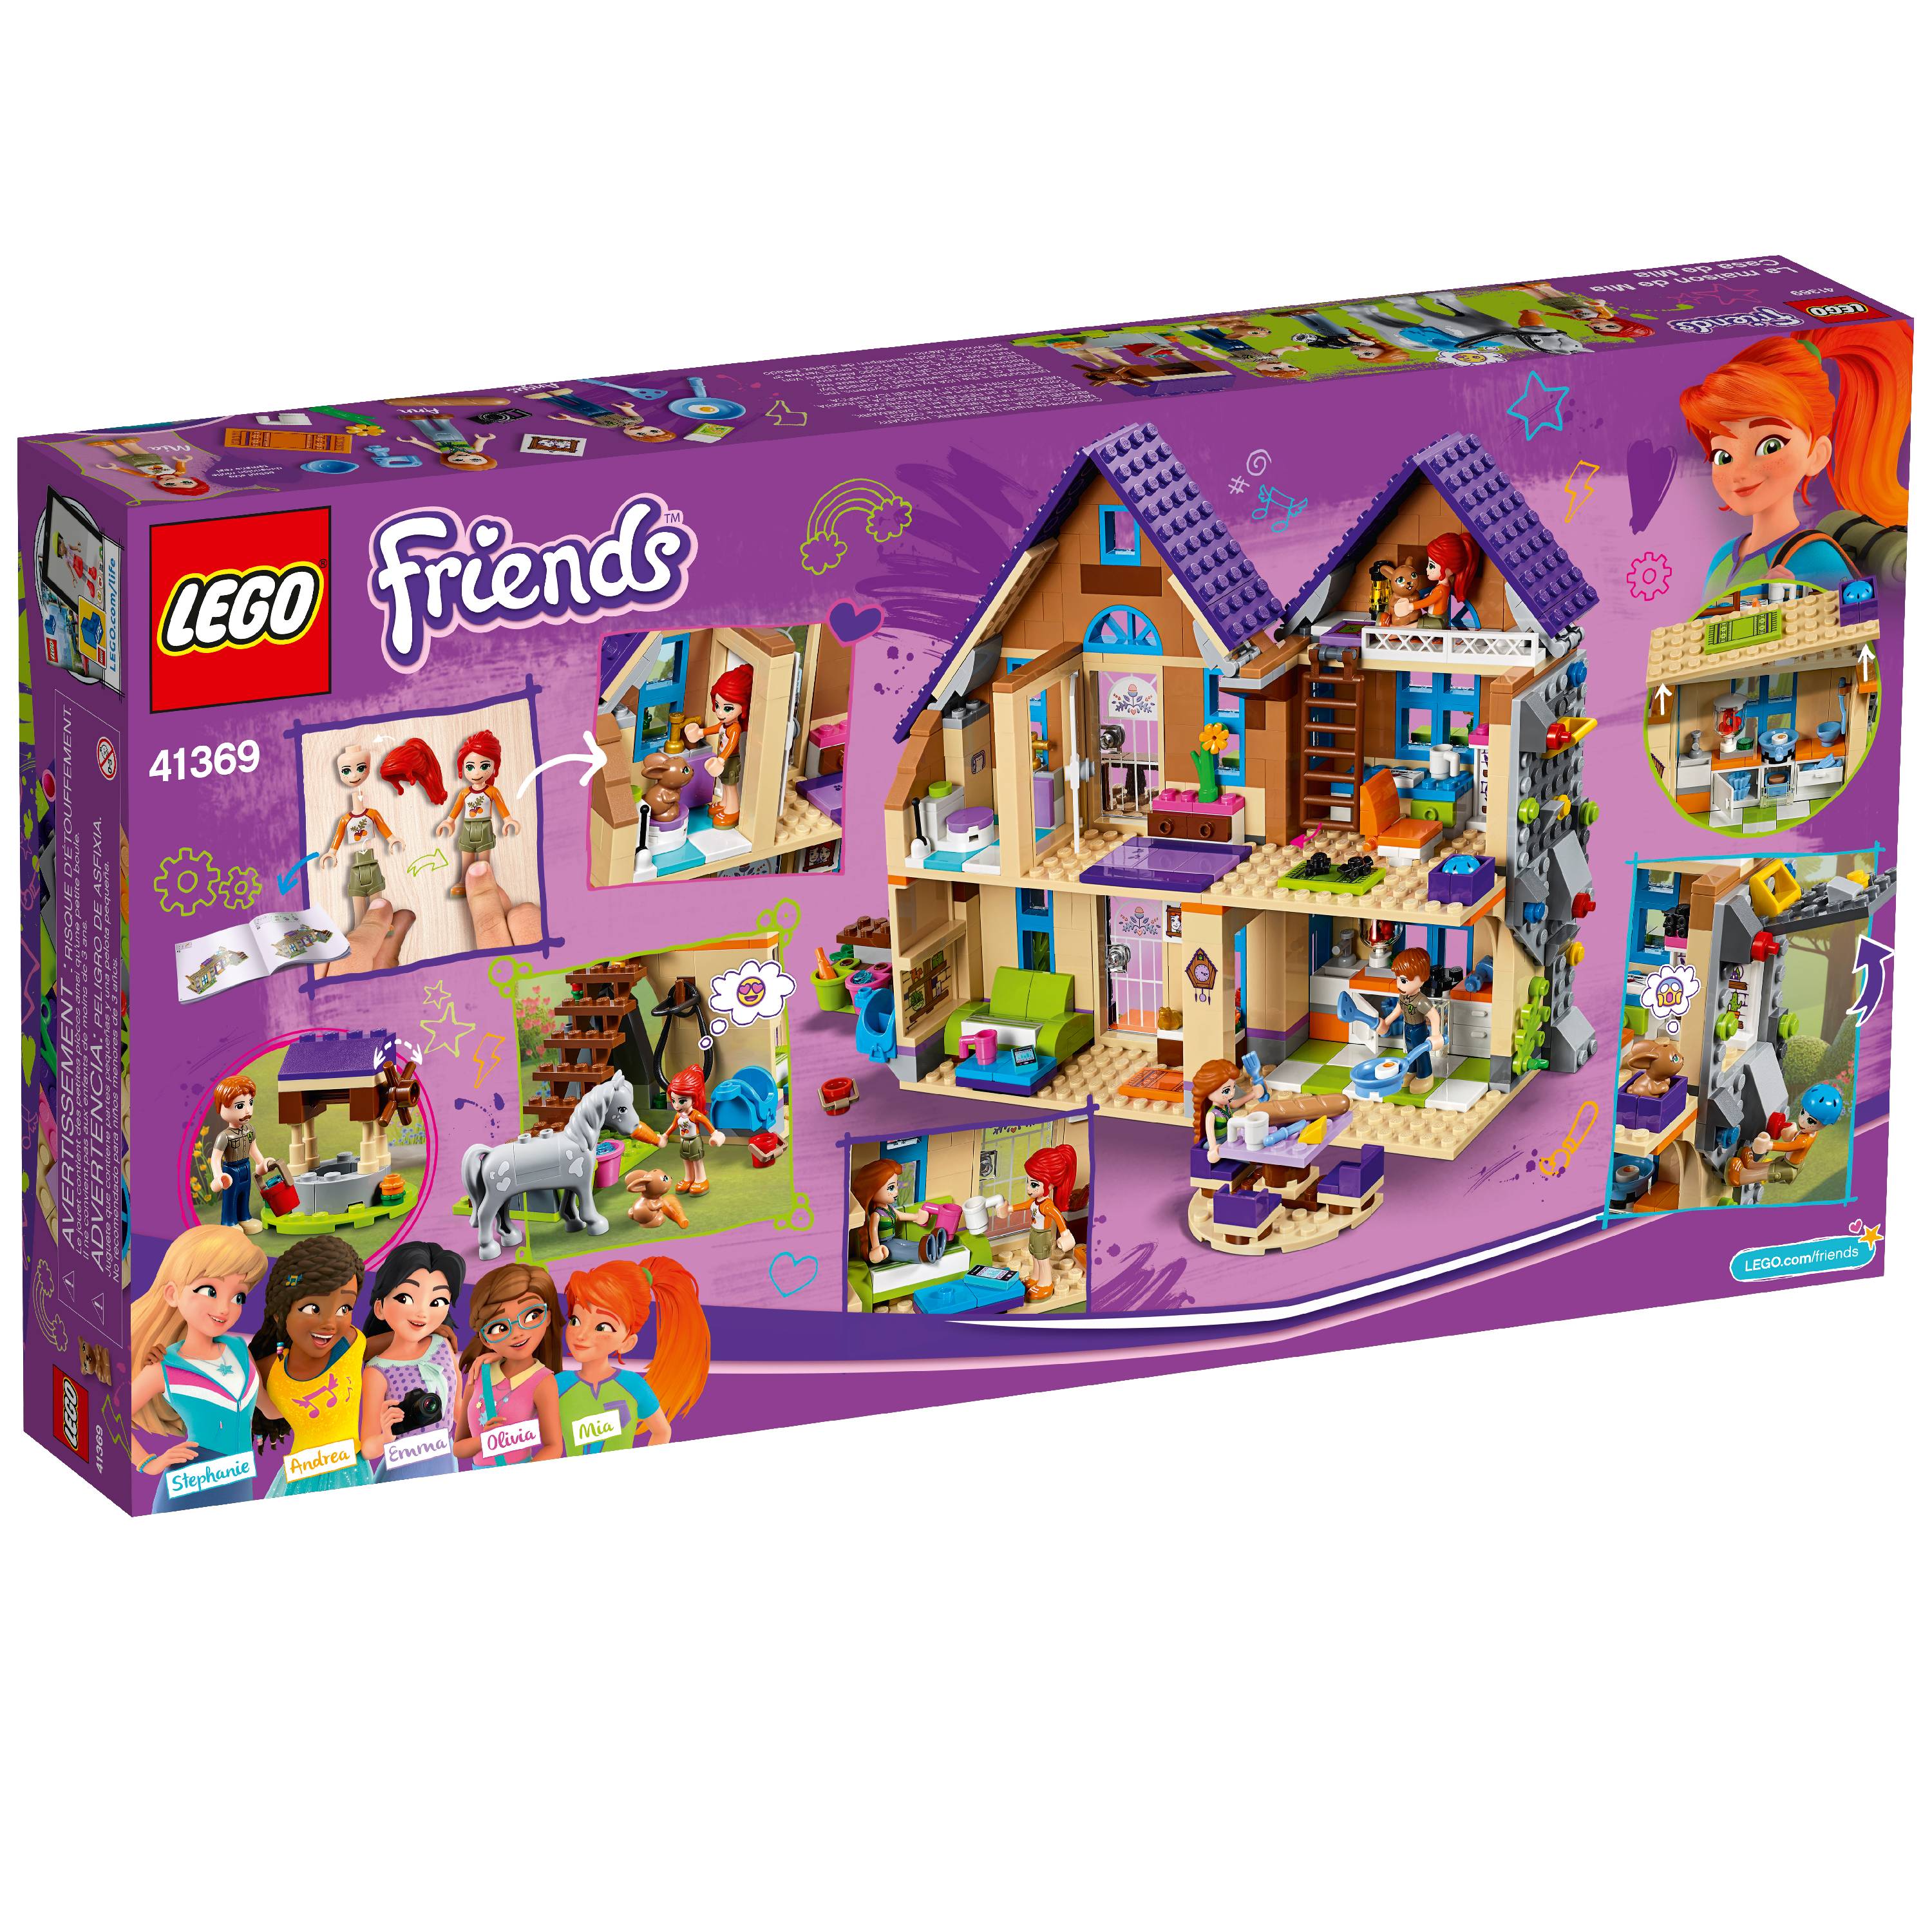 LEGO Friends Mias House 41369 - image 5 of 7